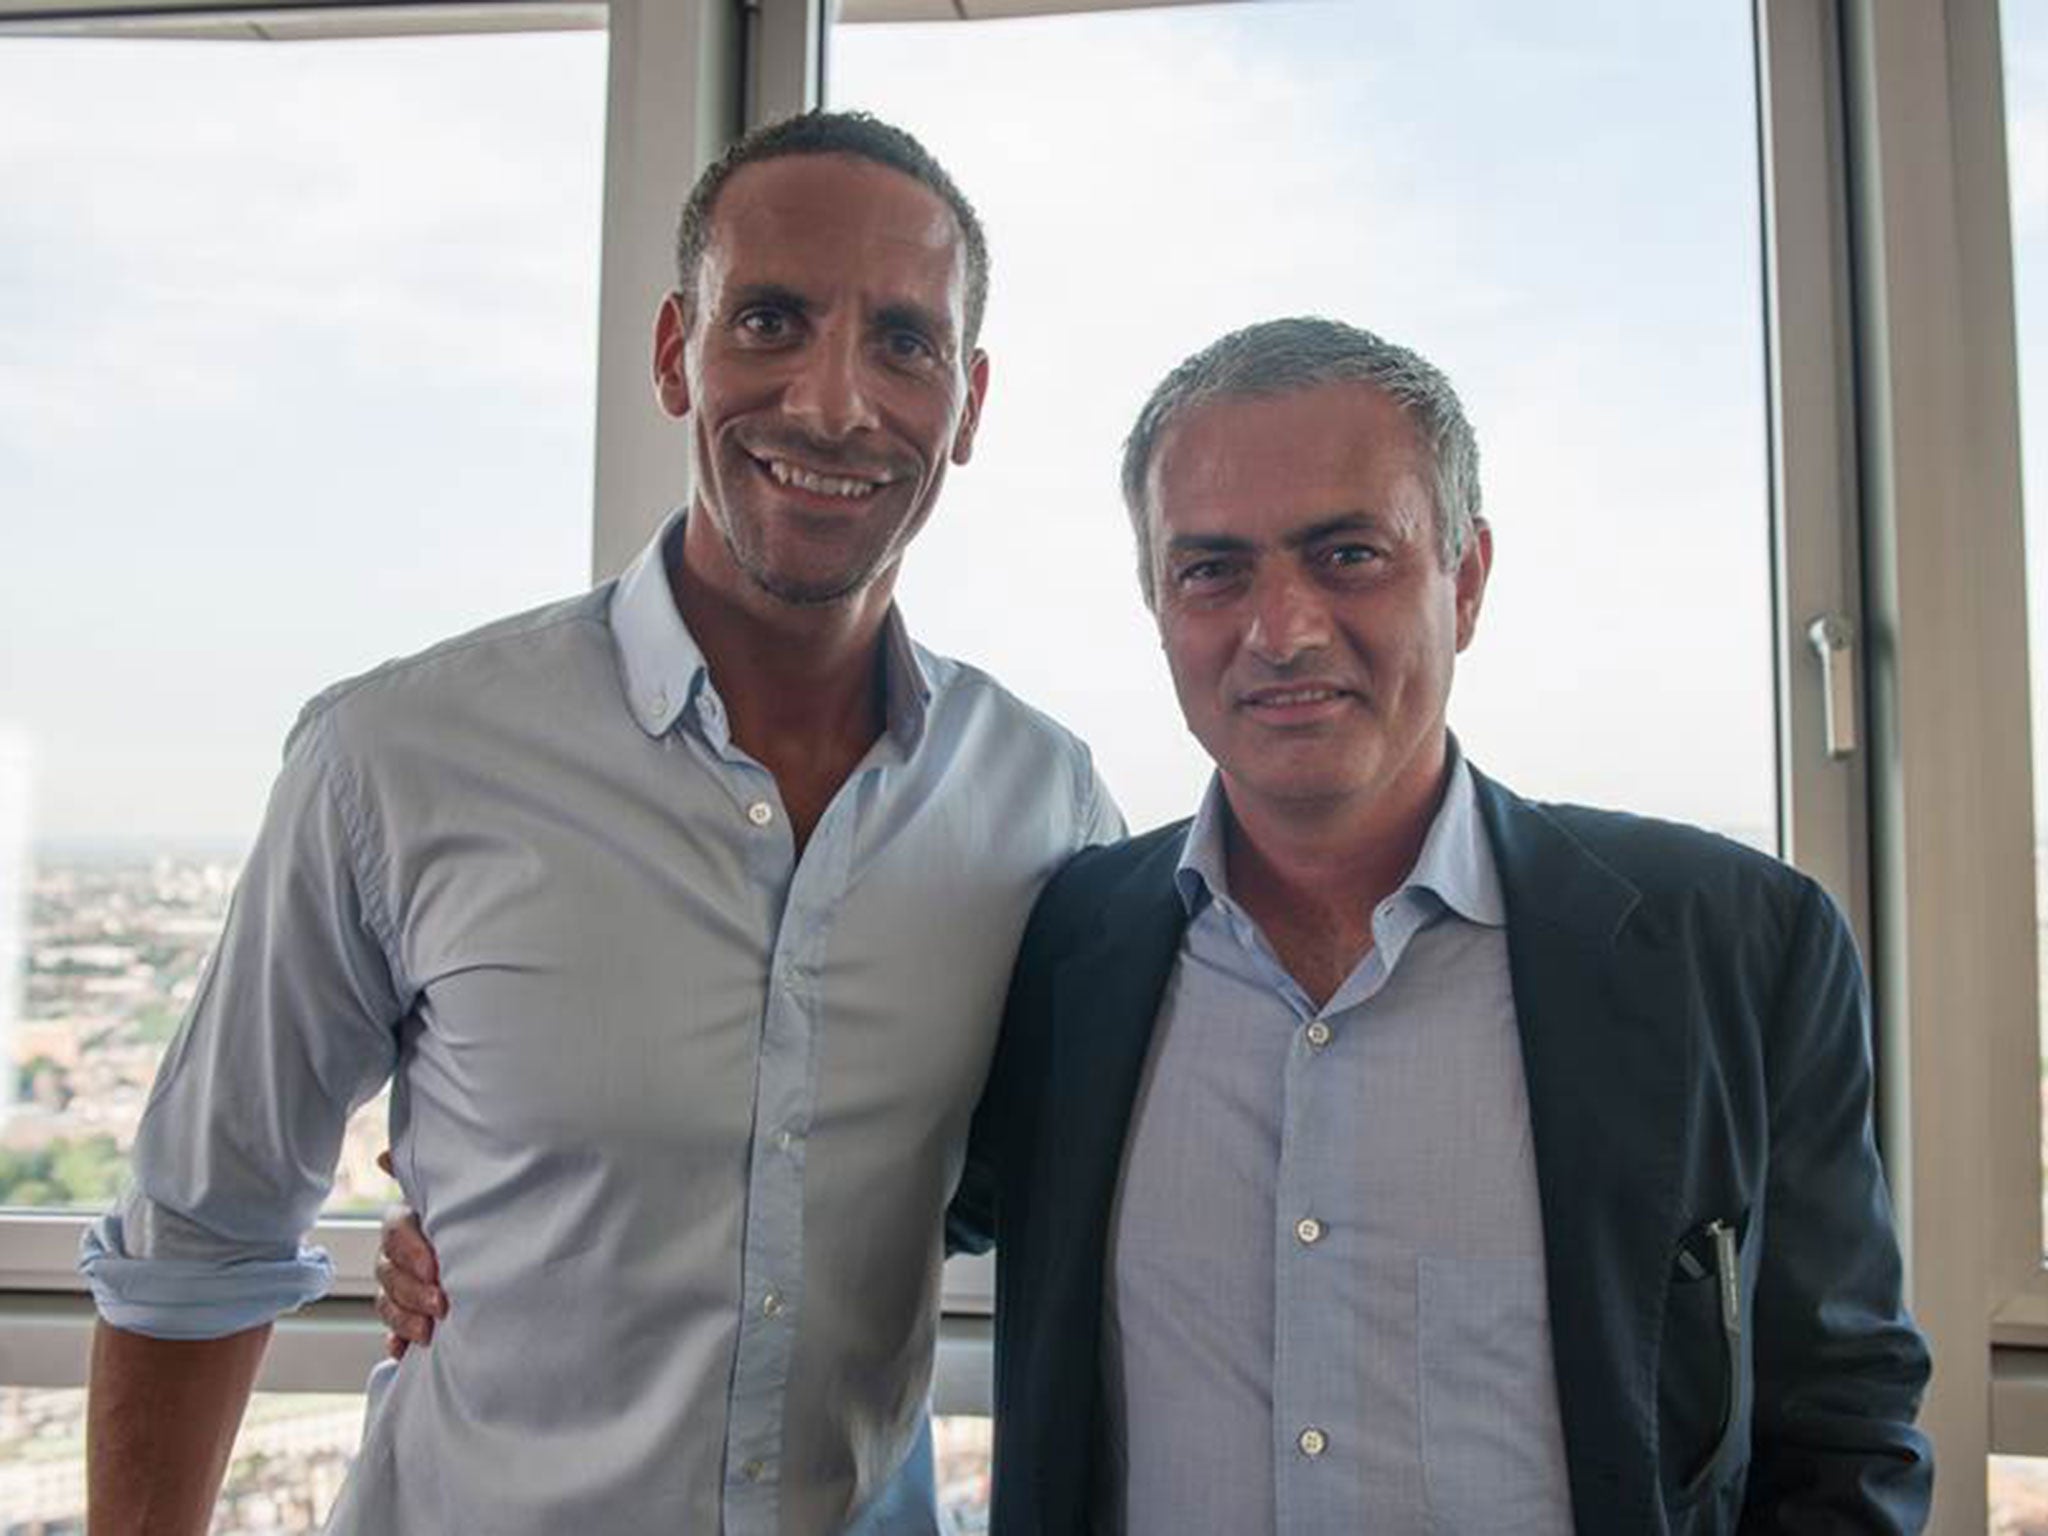 Rio Ferdinand (left) spoke to Jose Mourinho, who revealed his hopes for the new season